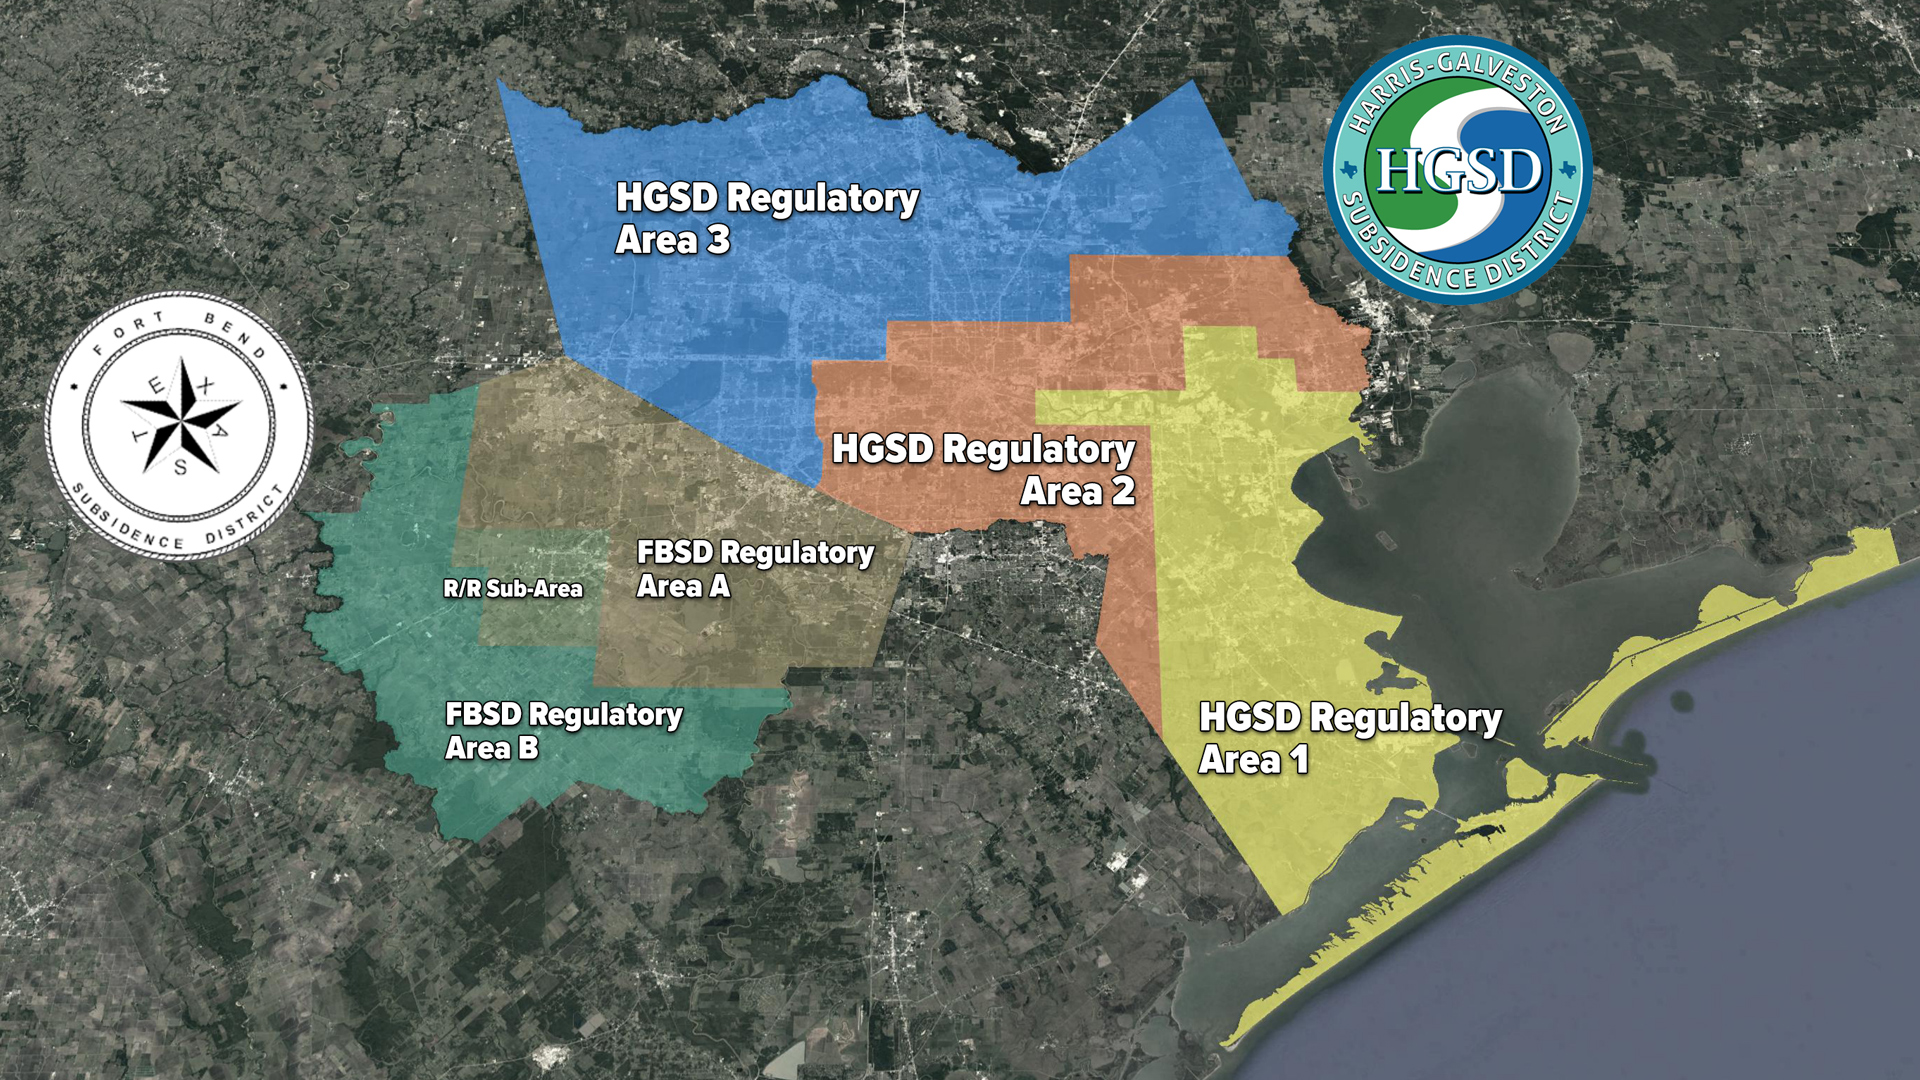 HGSD and FBSD Regulatory Areas